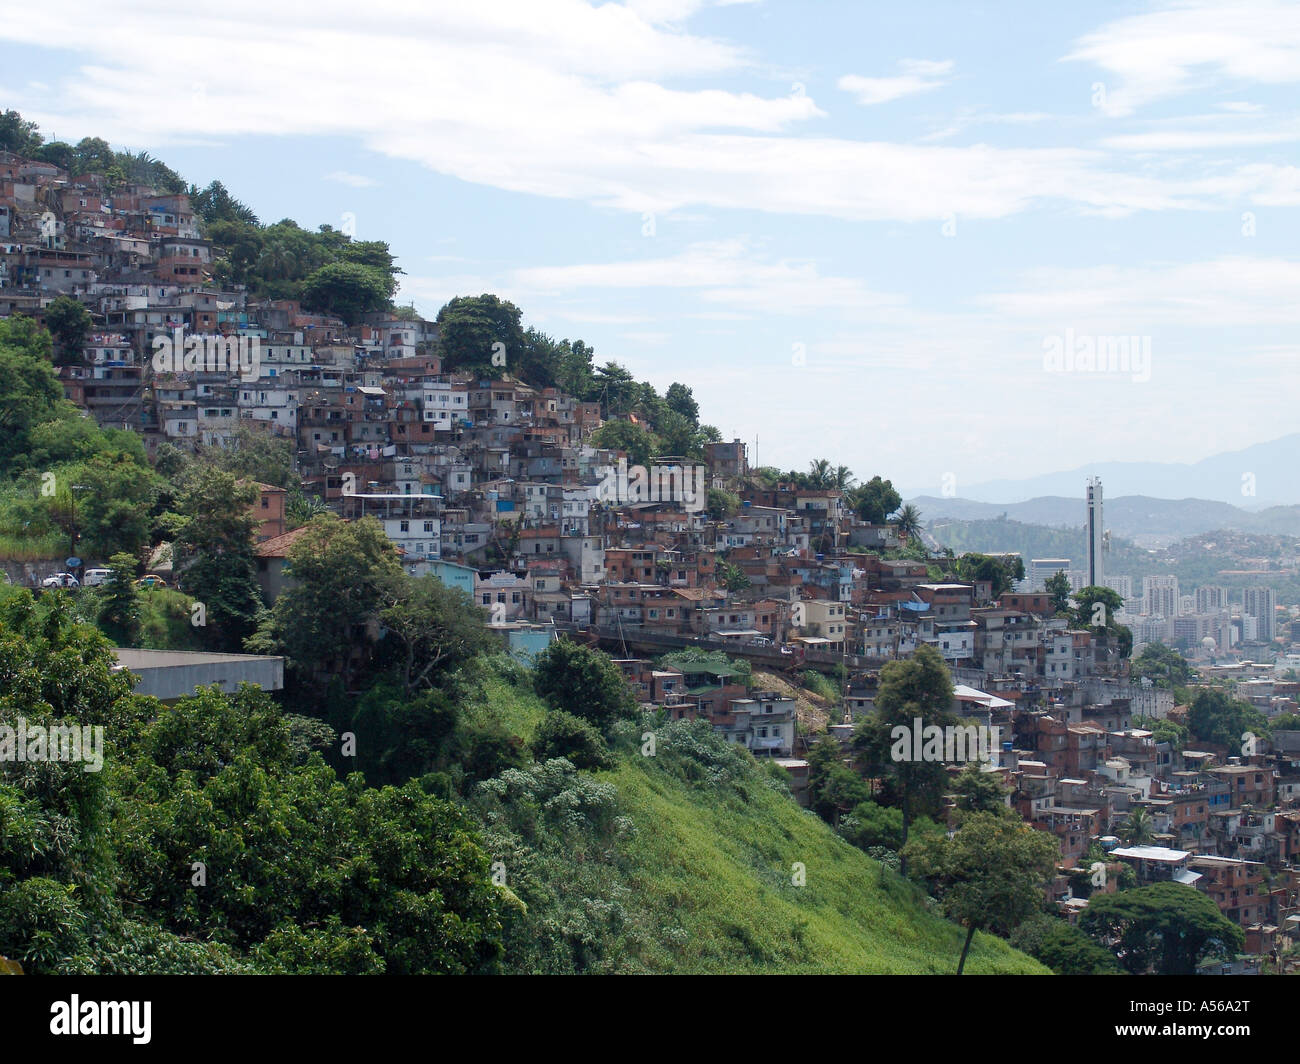 Painet iy8150 brazil favela rio janeiro viewed santa teresa 2005 country developing nation less economically developed Stock Photo